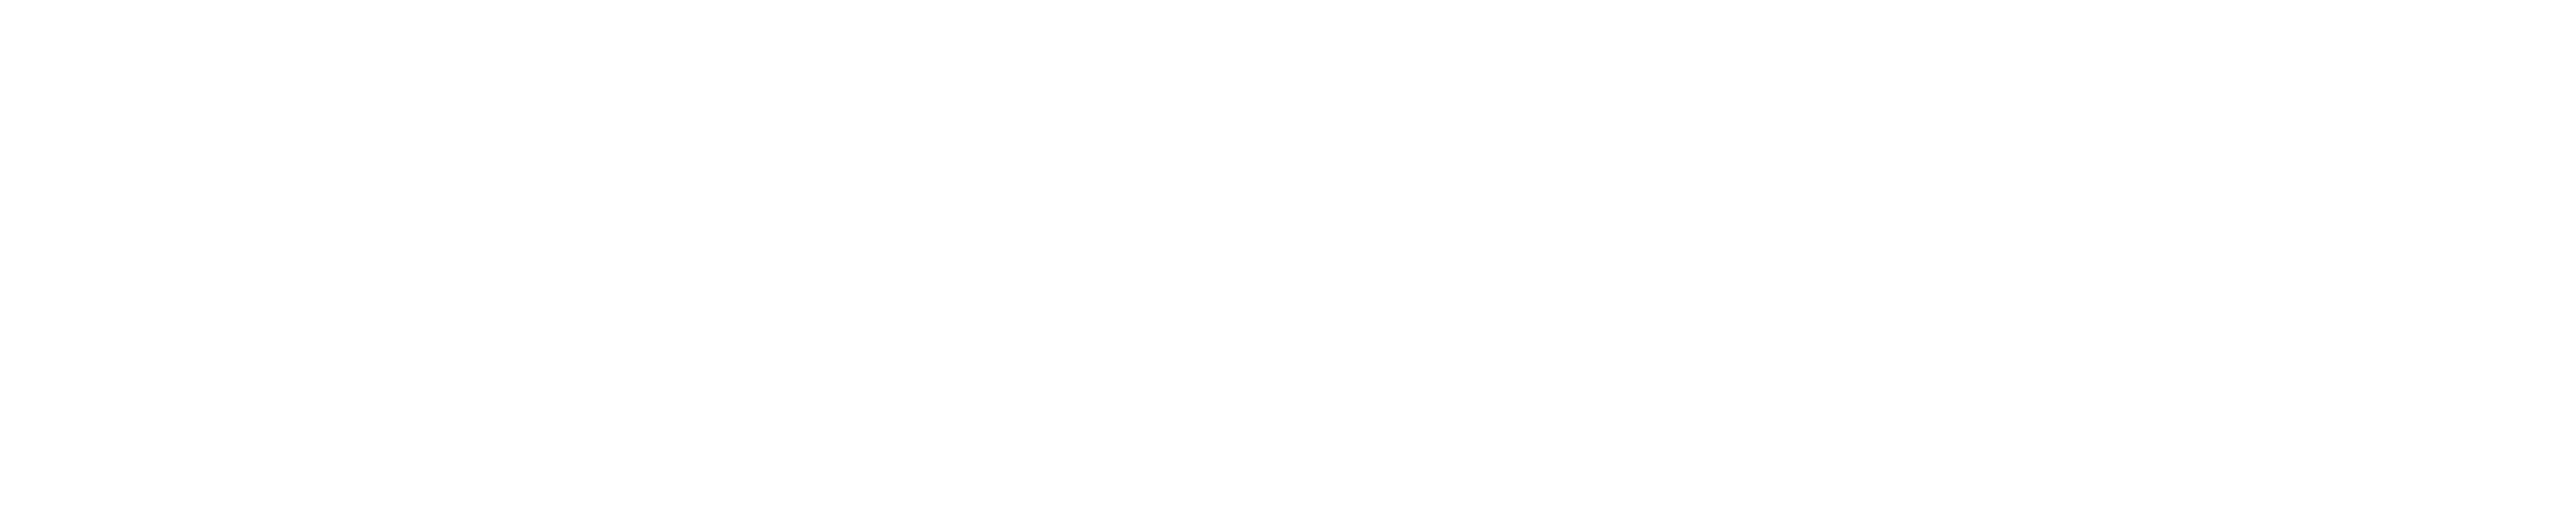 Logo Tequila unlimited original1